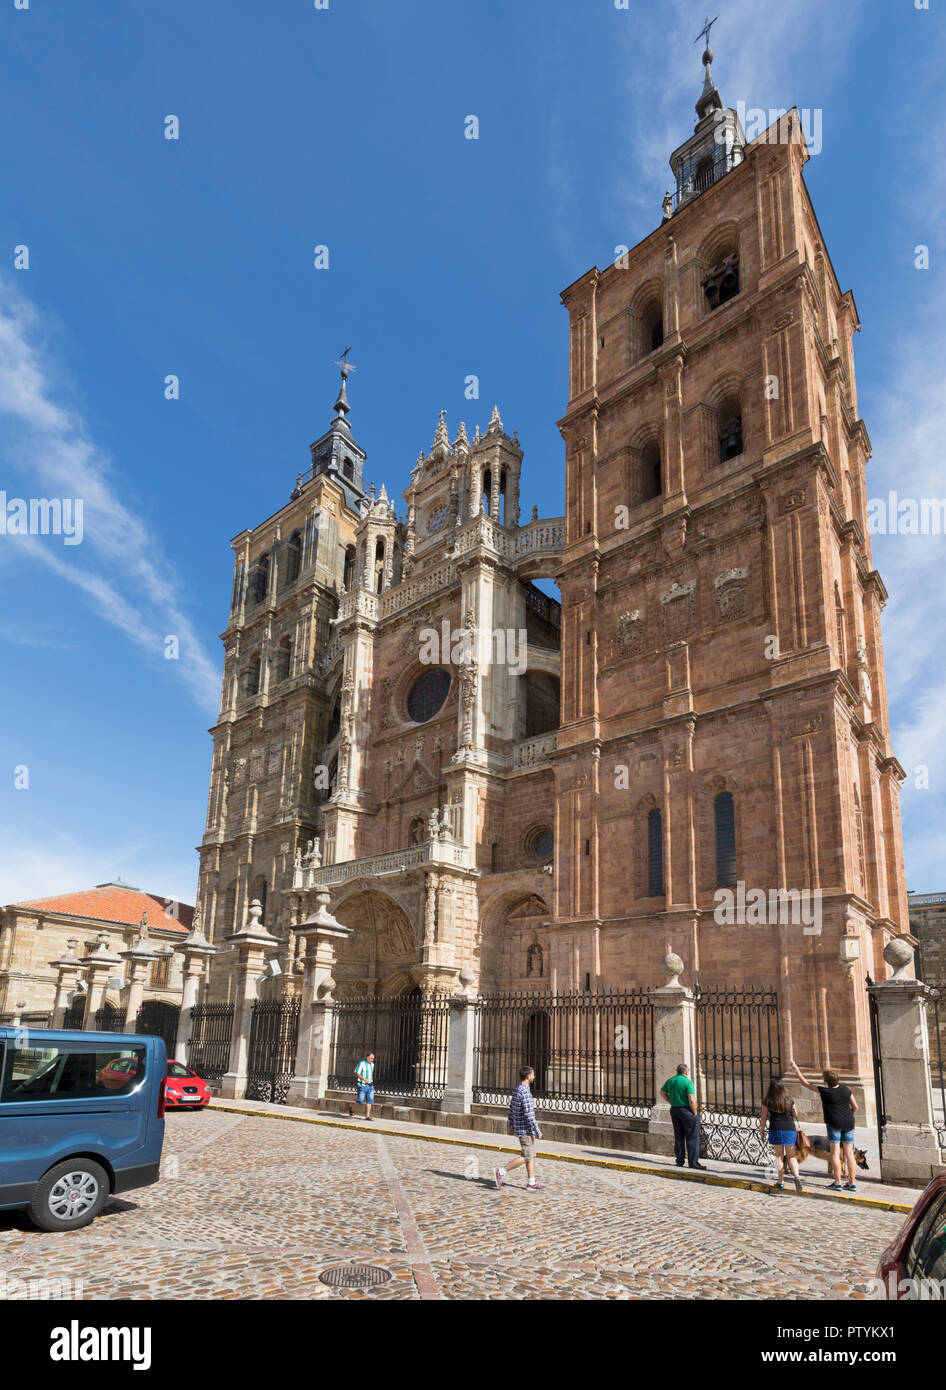 Astorga, Leon Provinz, Kastilien und Leon, Spanien. Astorga Kathedrale. Catedral de Santa Maria de Astorga. Stockfoto